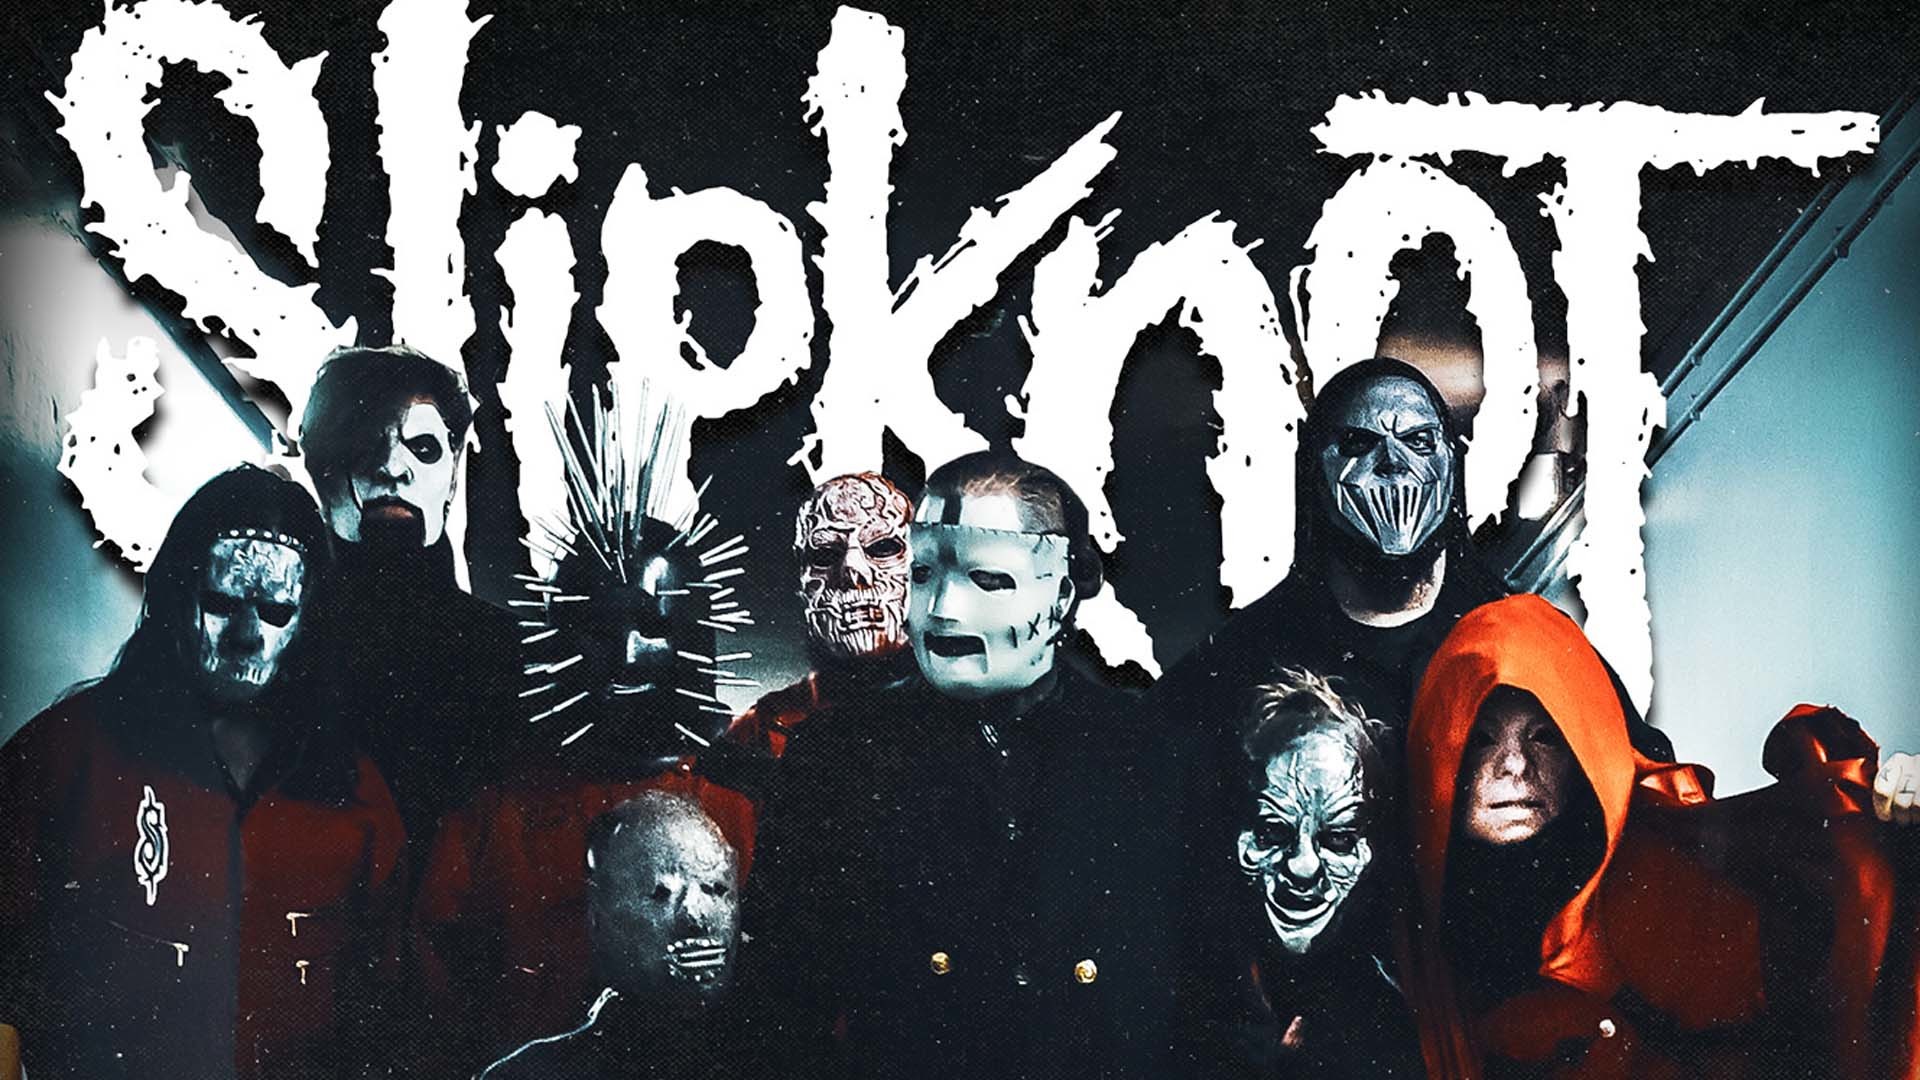 Die Band Slipknot